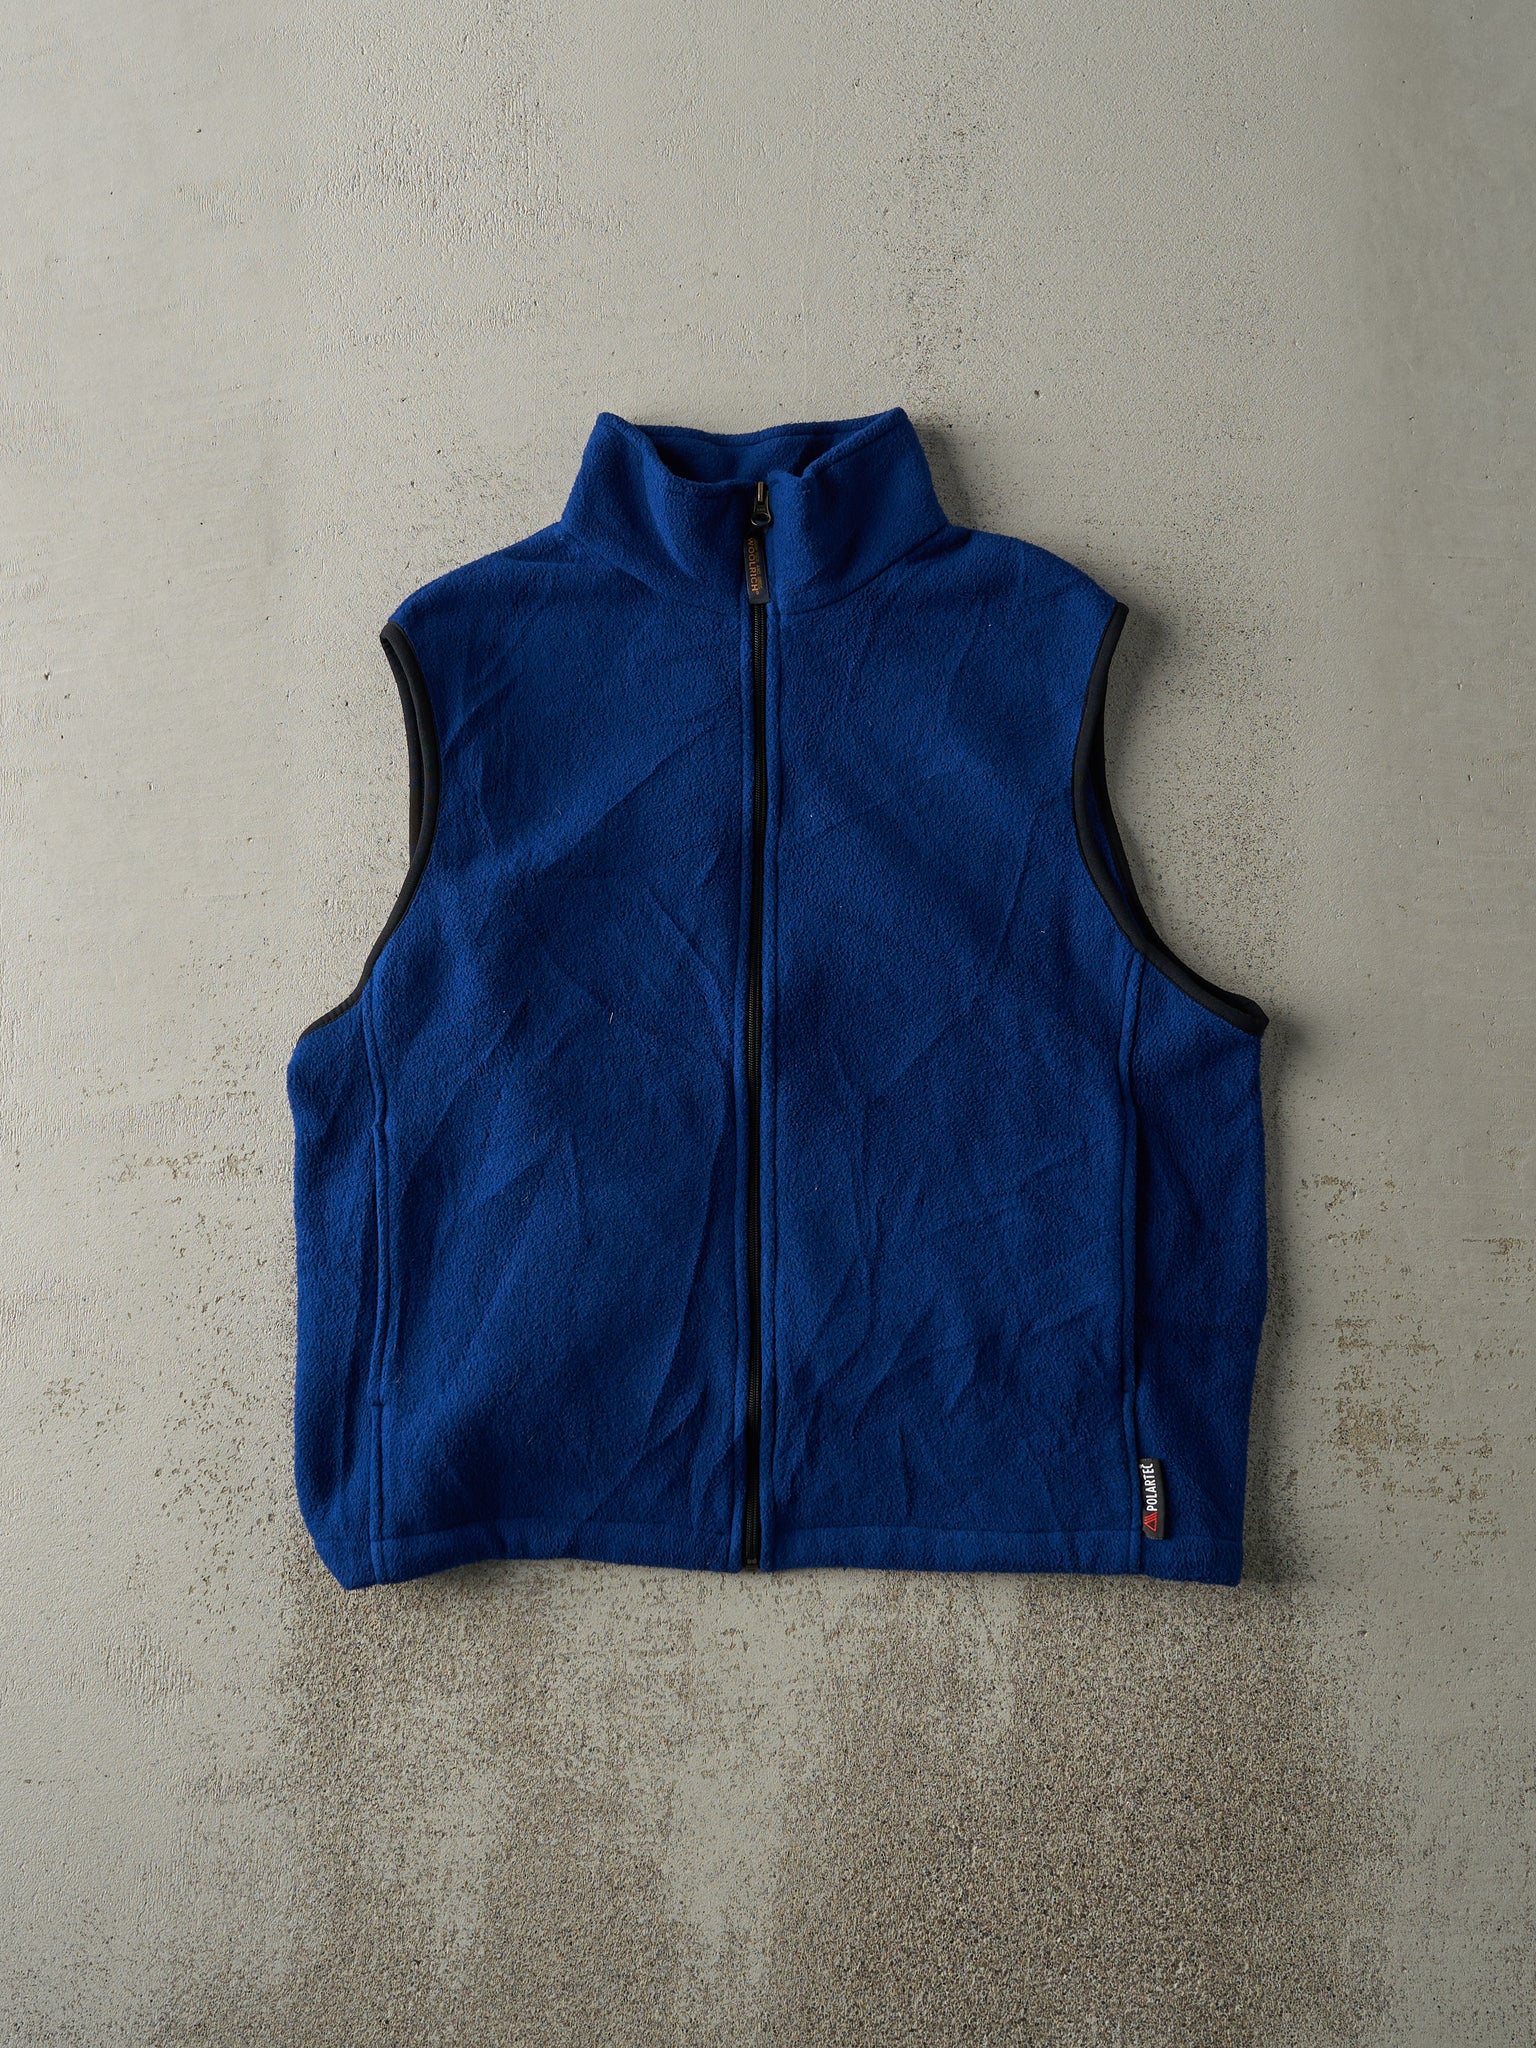 Vintage 90s Royal Blue Woolrich Fleece Vest (M)